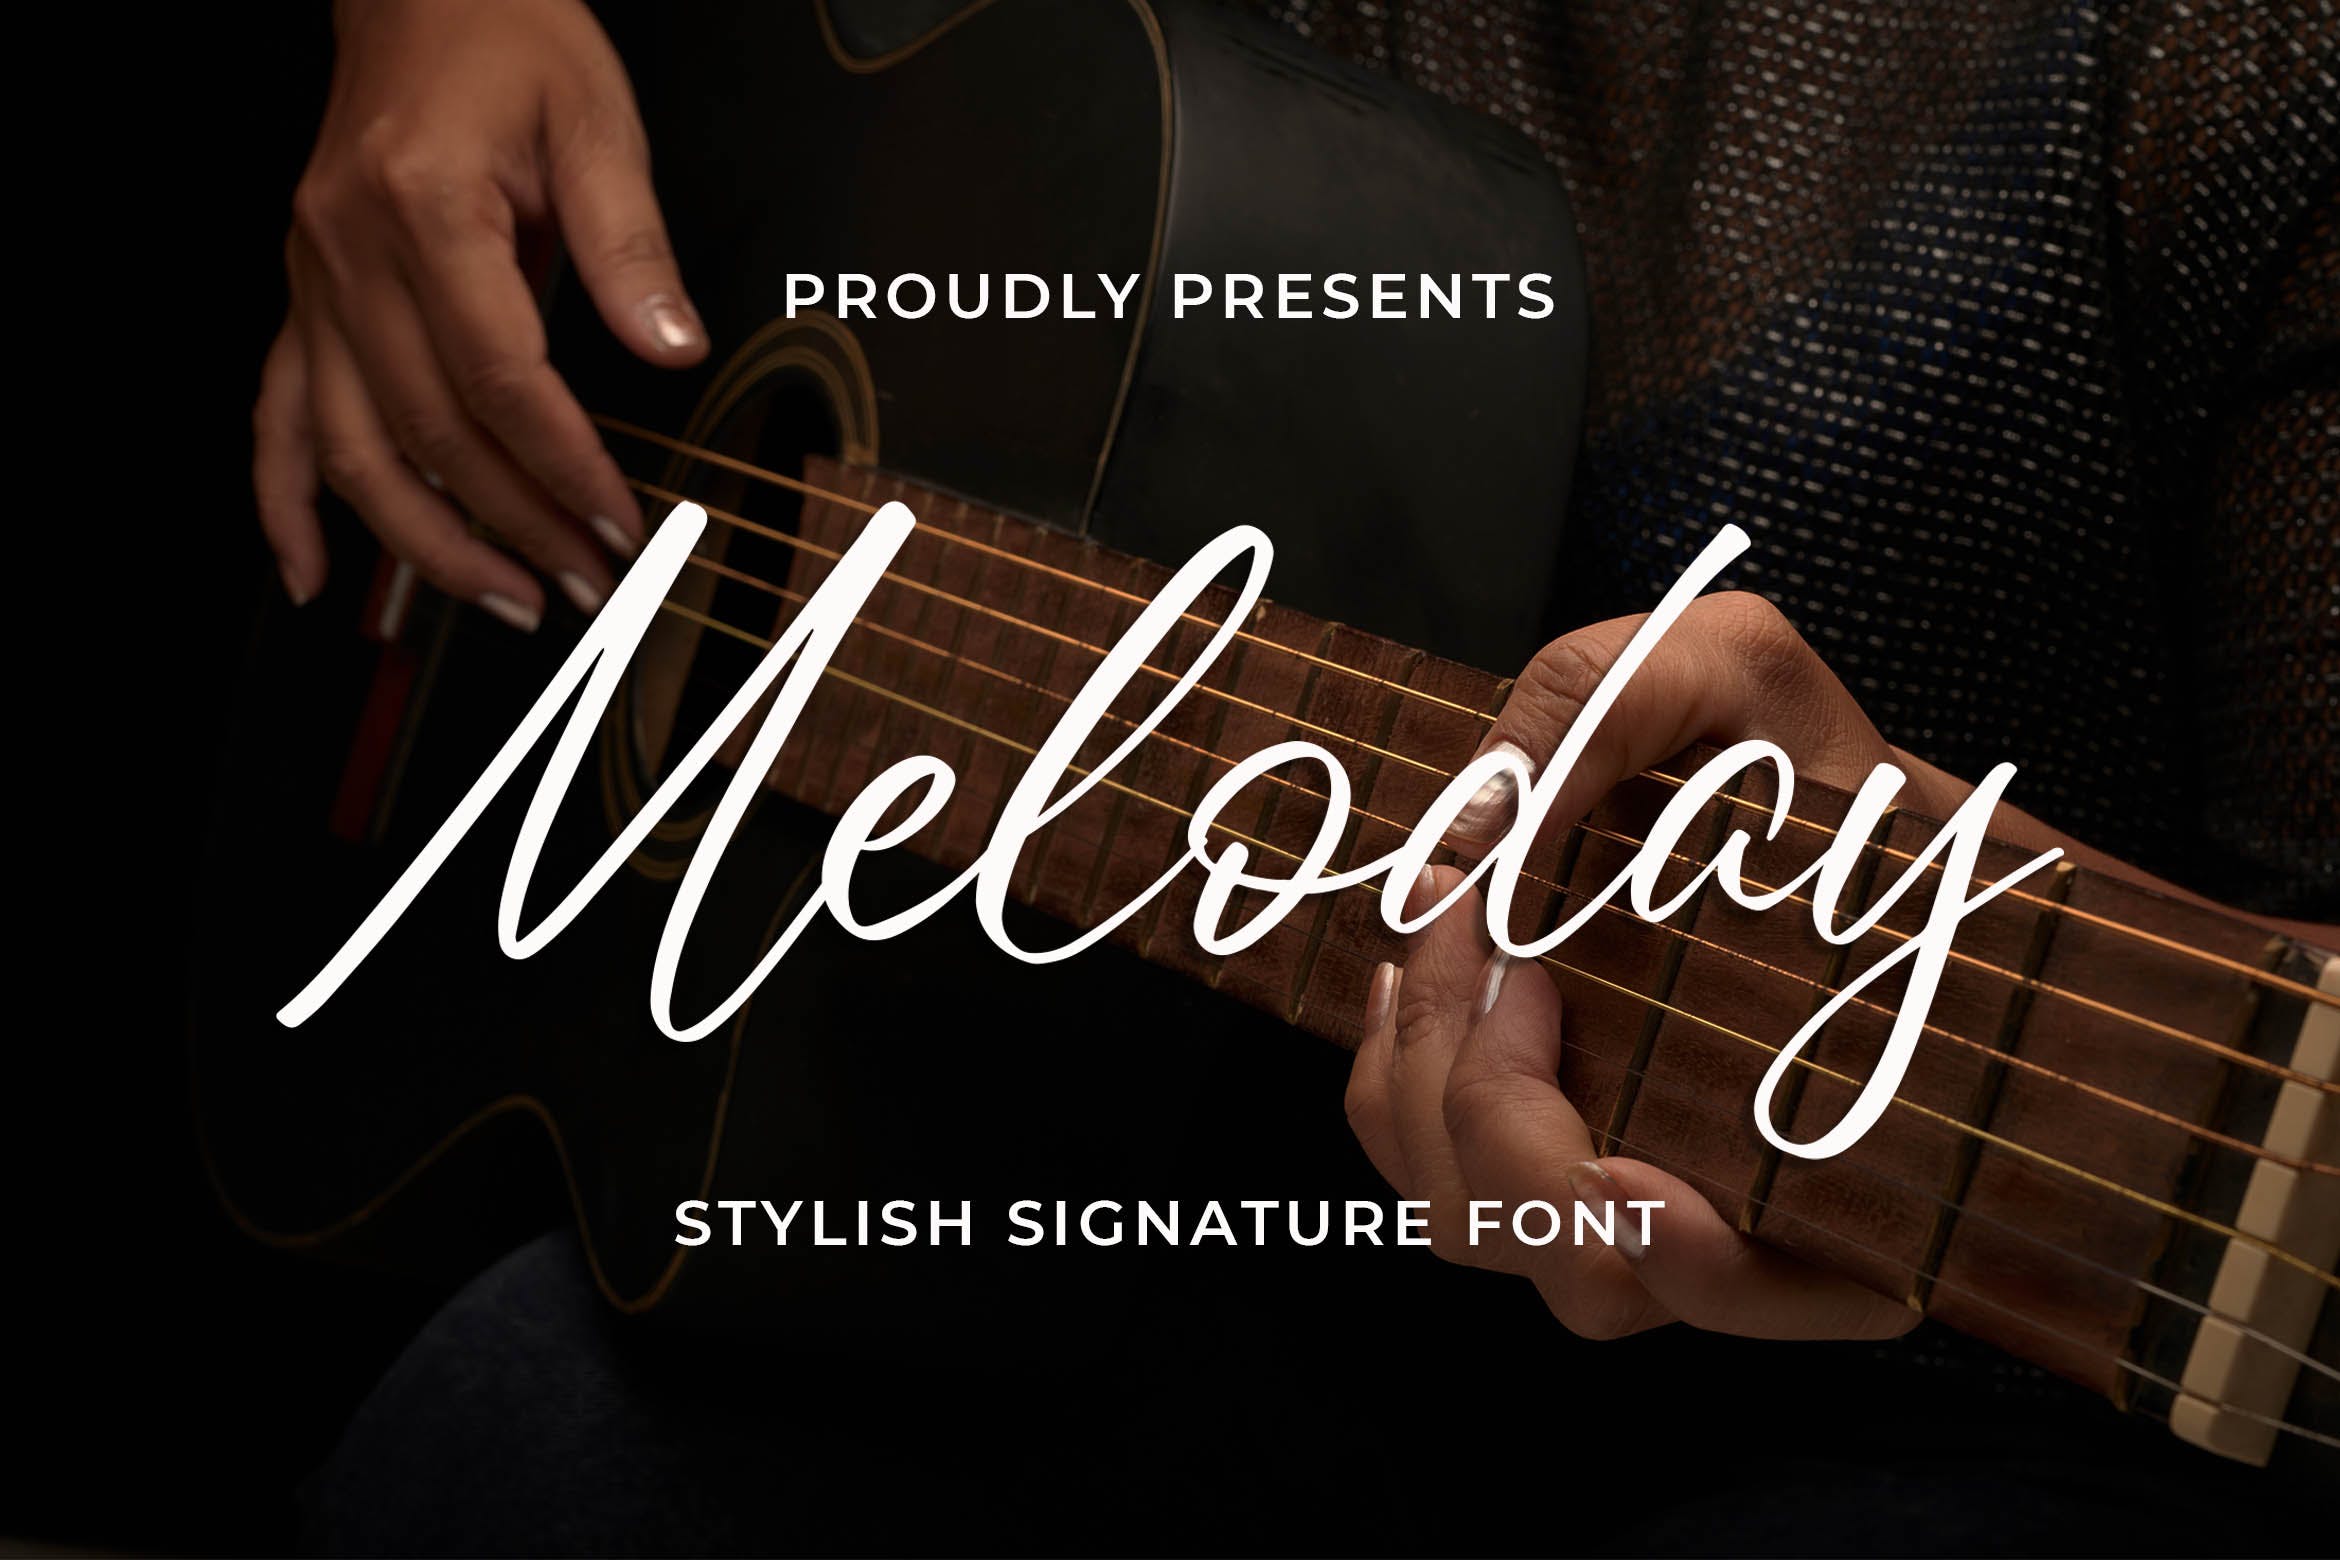 英文时尚签名手写字体第一素材精选 Meloday – Stylish Signature Font插图